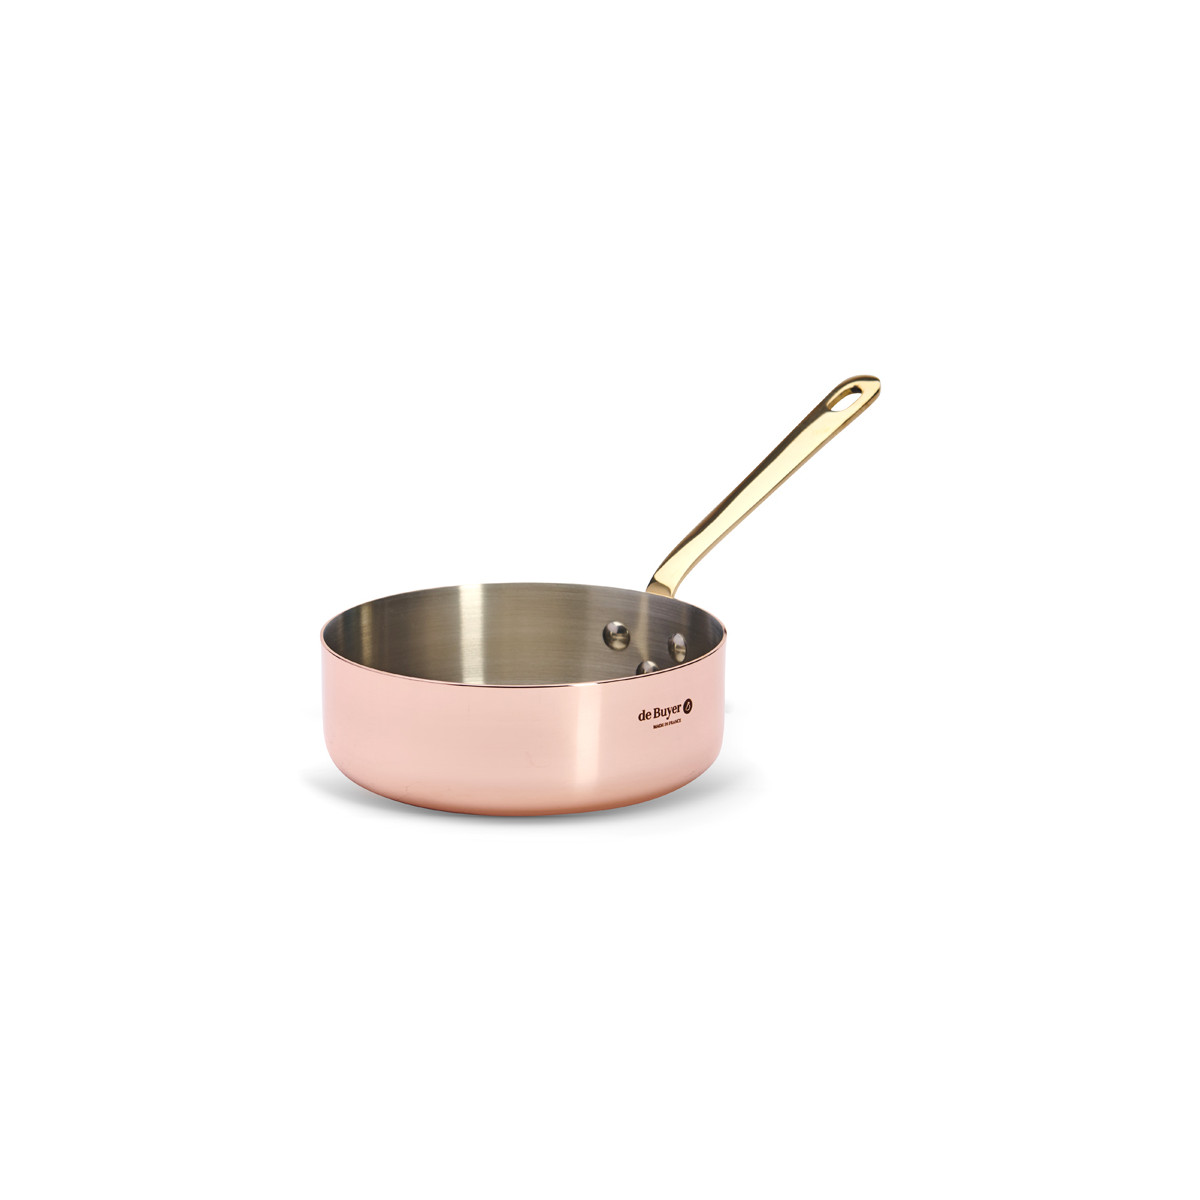 INOCUIVRE SERVICE Copper Saucepan with Brass Handles - Mini